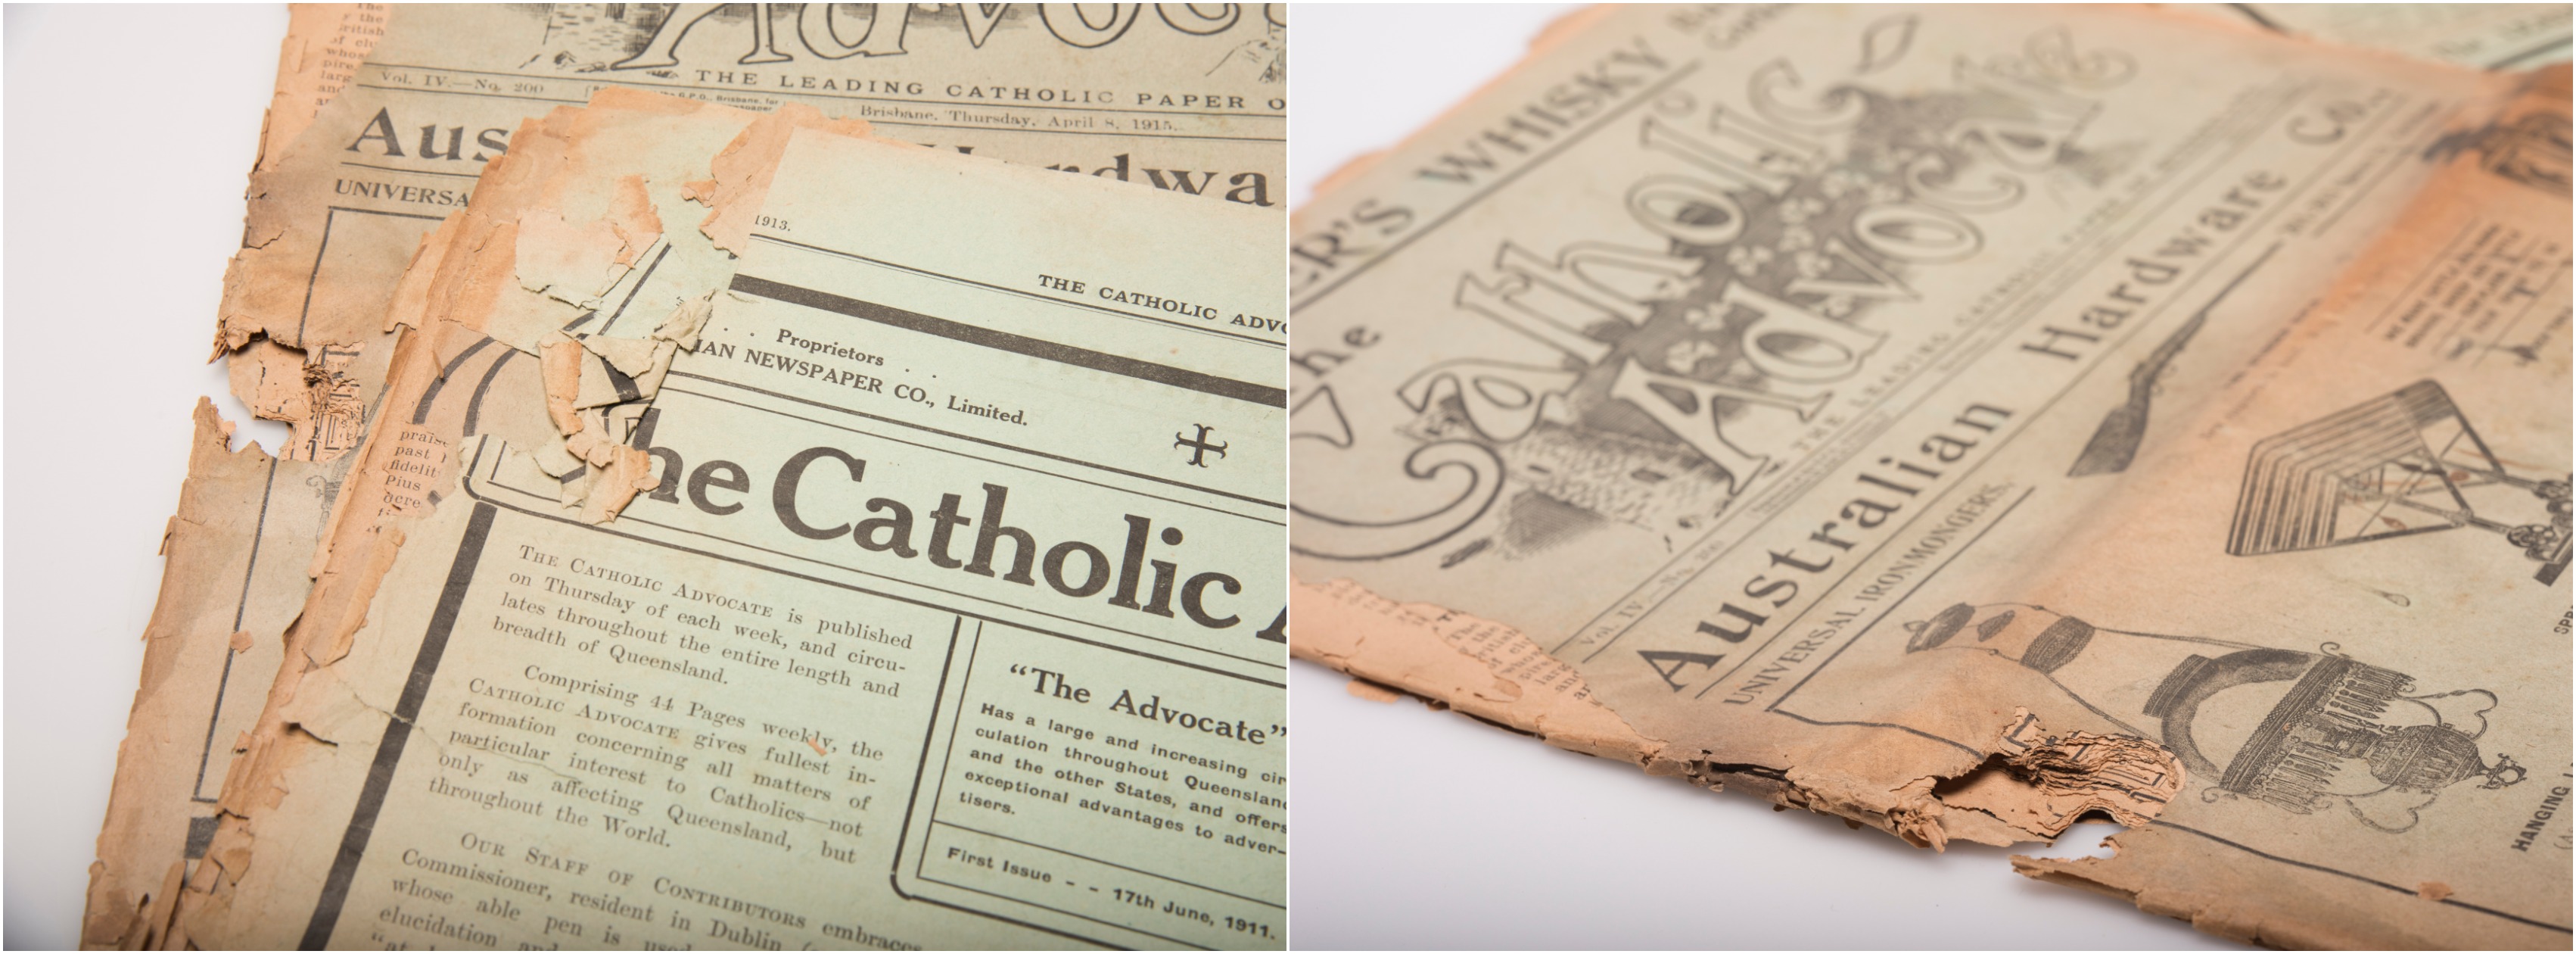 The Catholic Advocate fragile newspaper